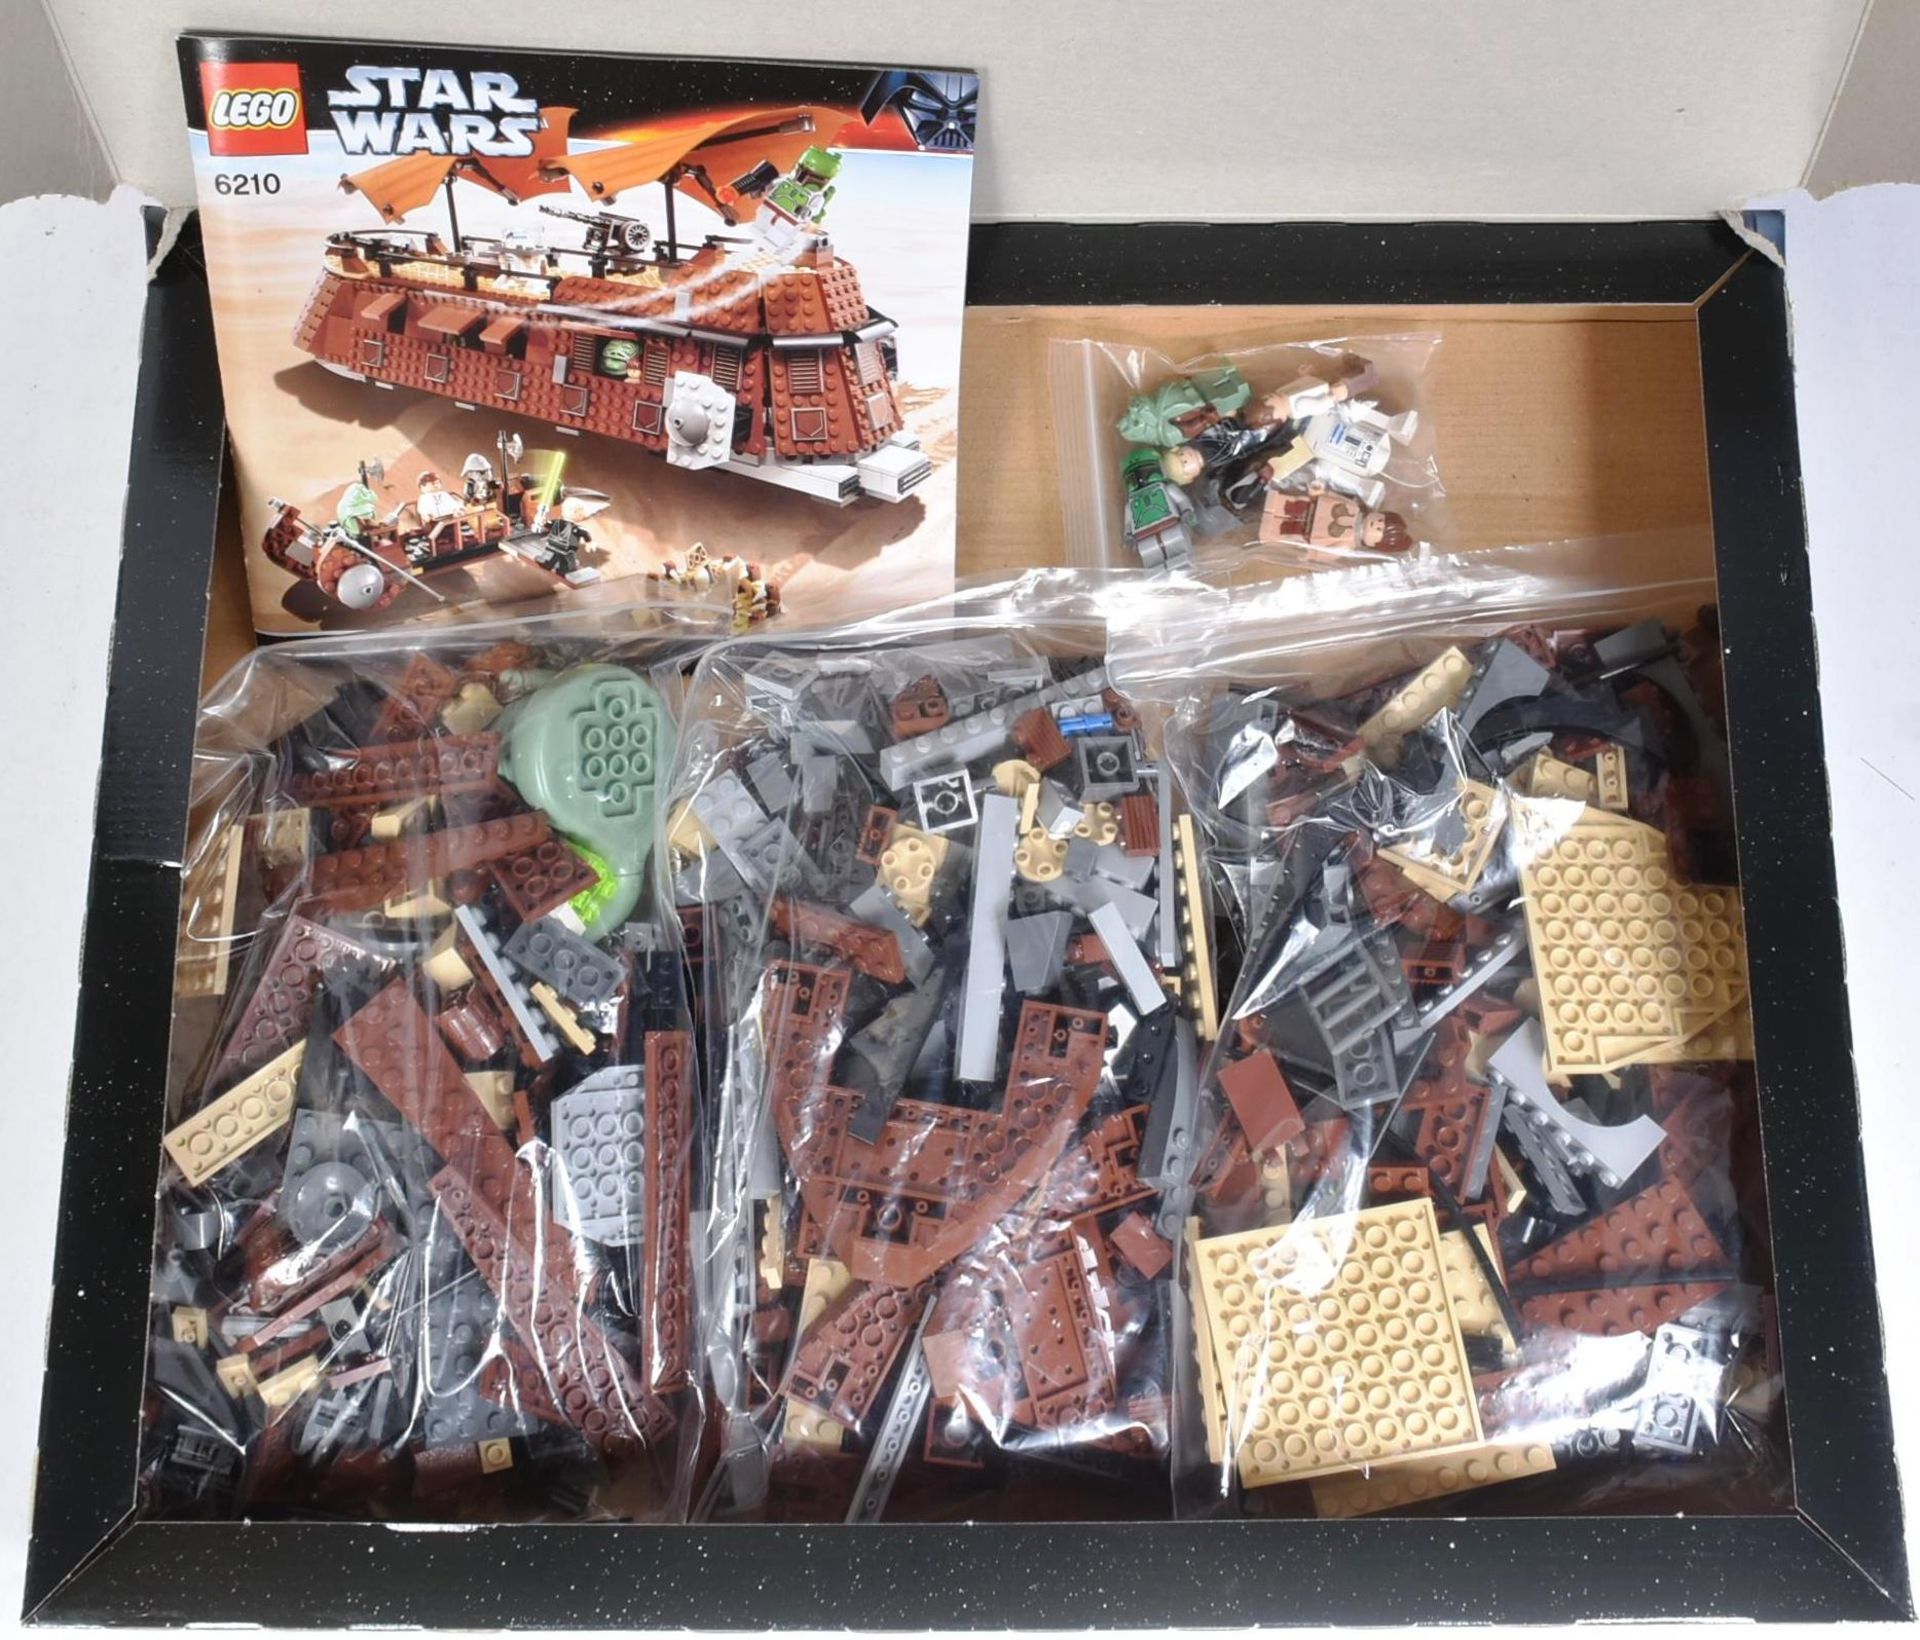 LEGO - STAR WARS - 6210 - JABBAS SAIL BARGE - Image 3 of 6